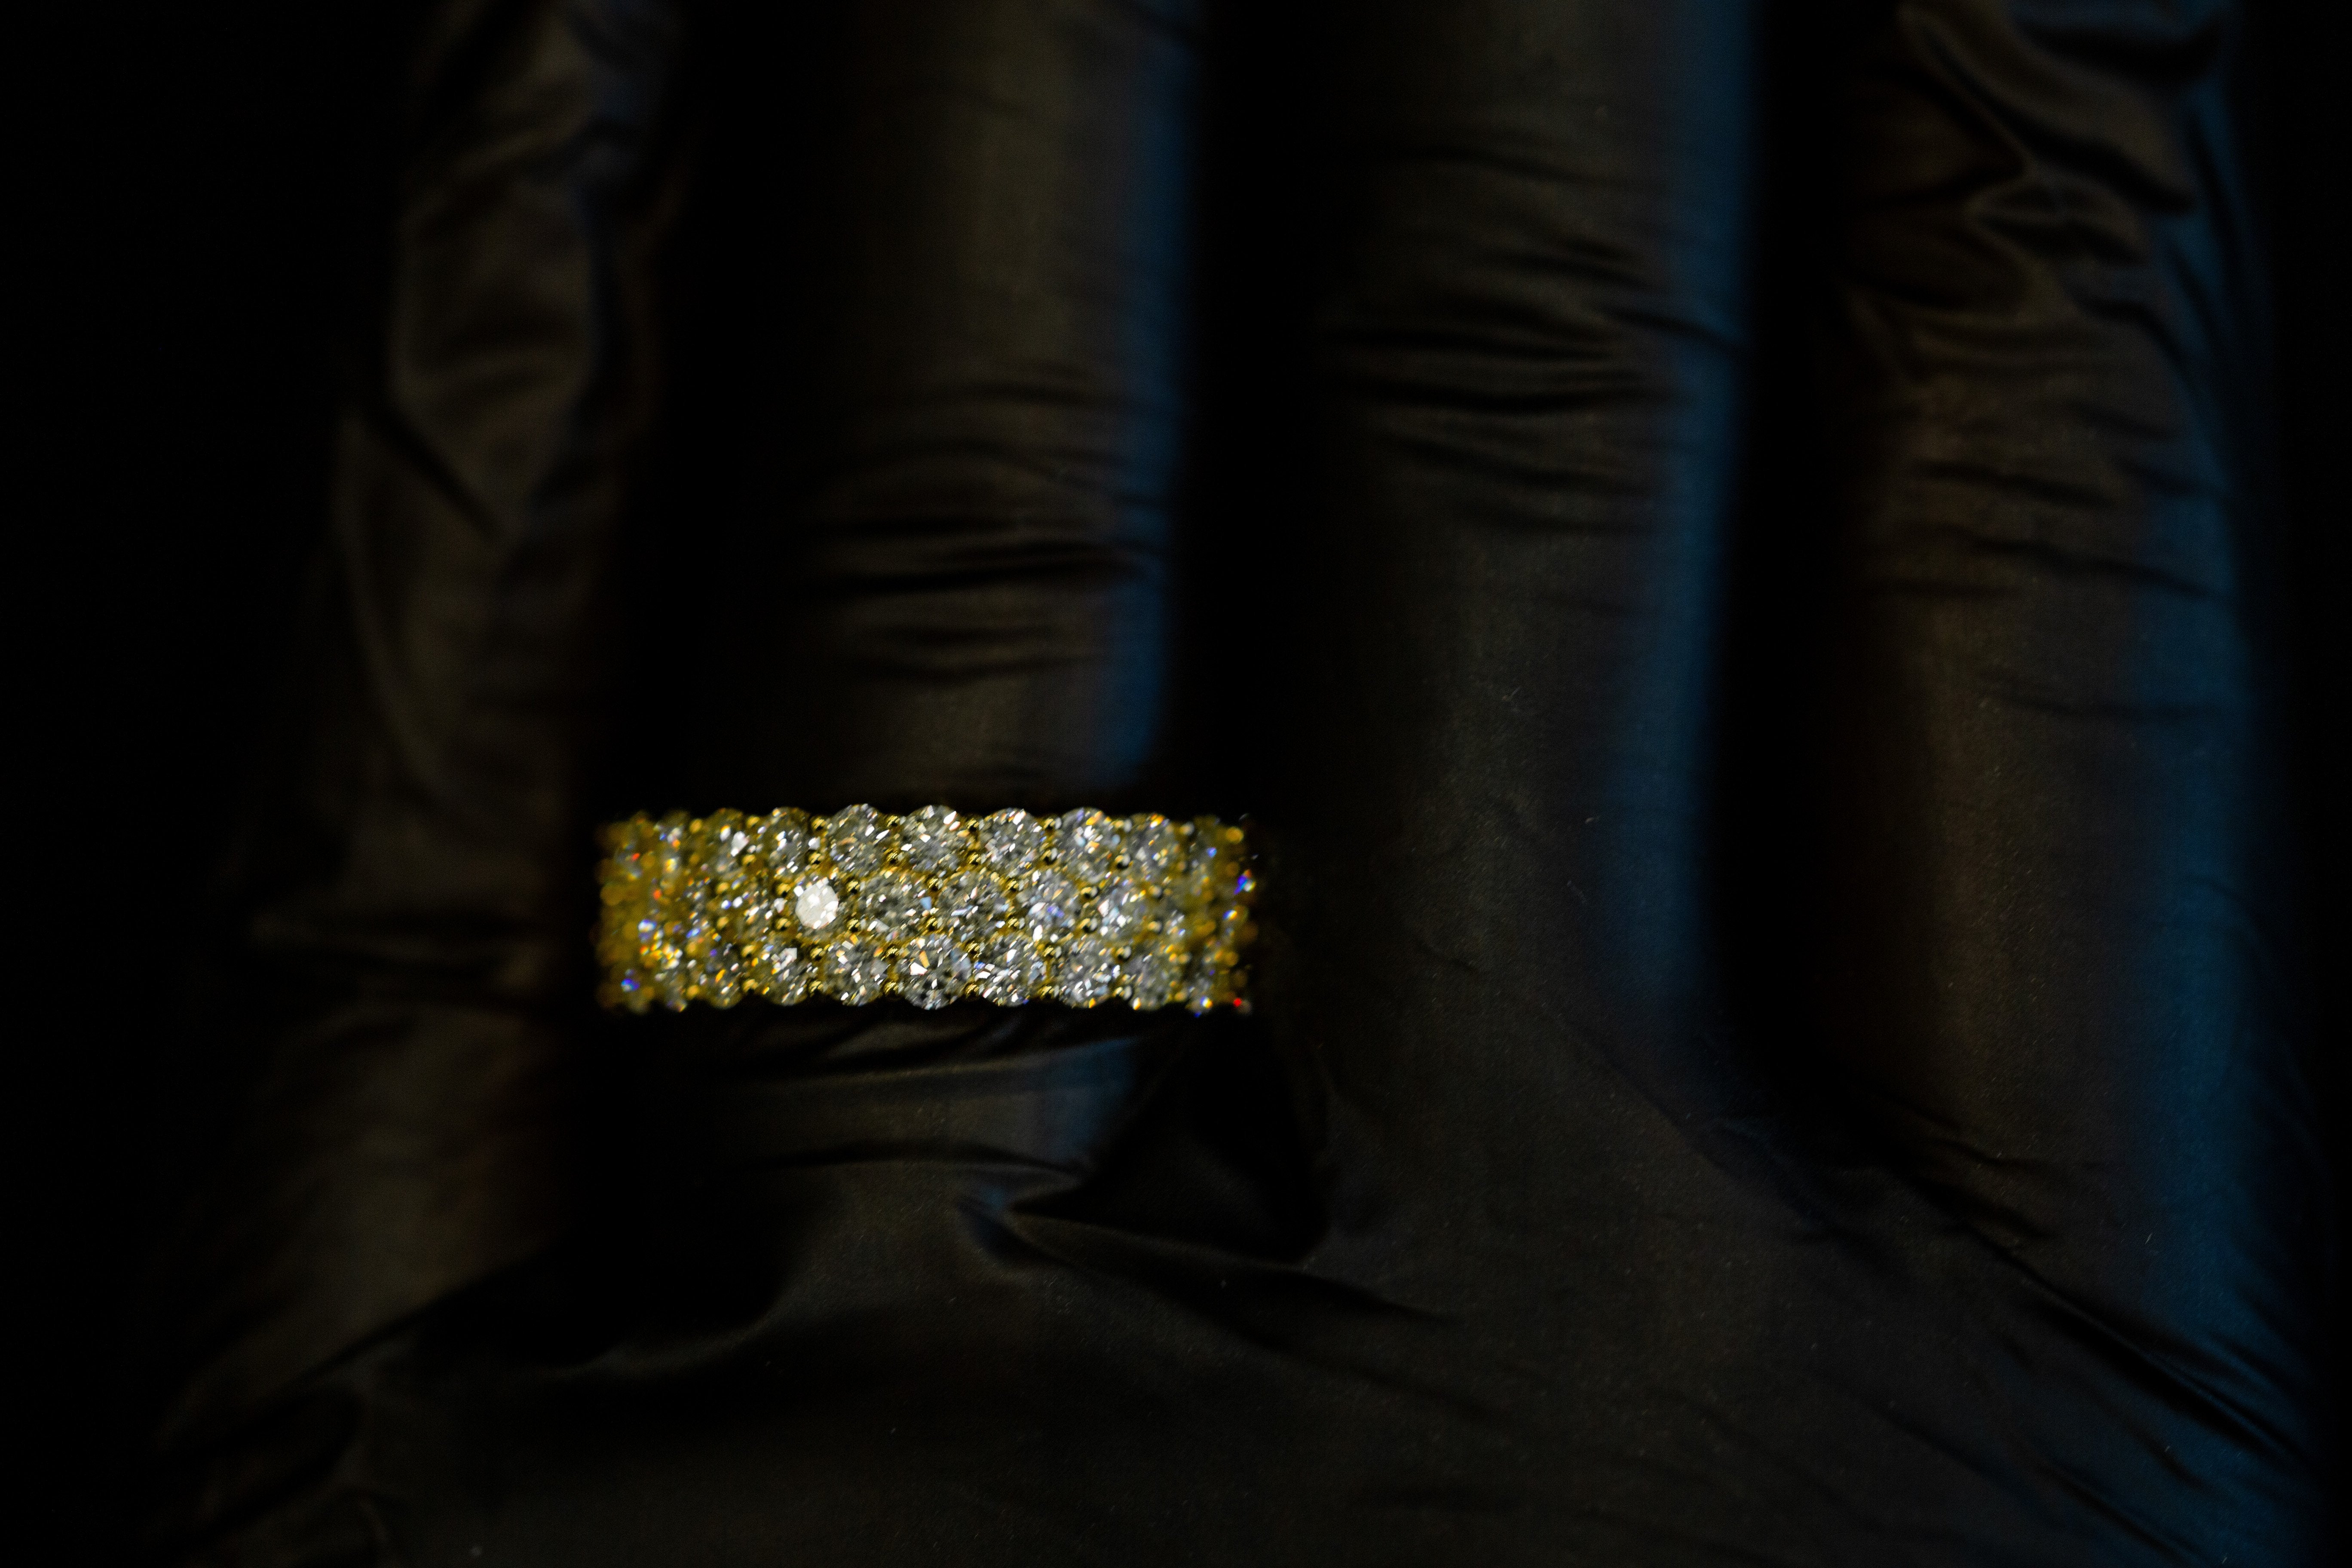 4.73 CT. Diamond Ring in 10K Gold - White Carat Diamonds 